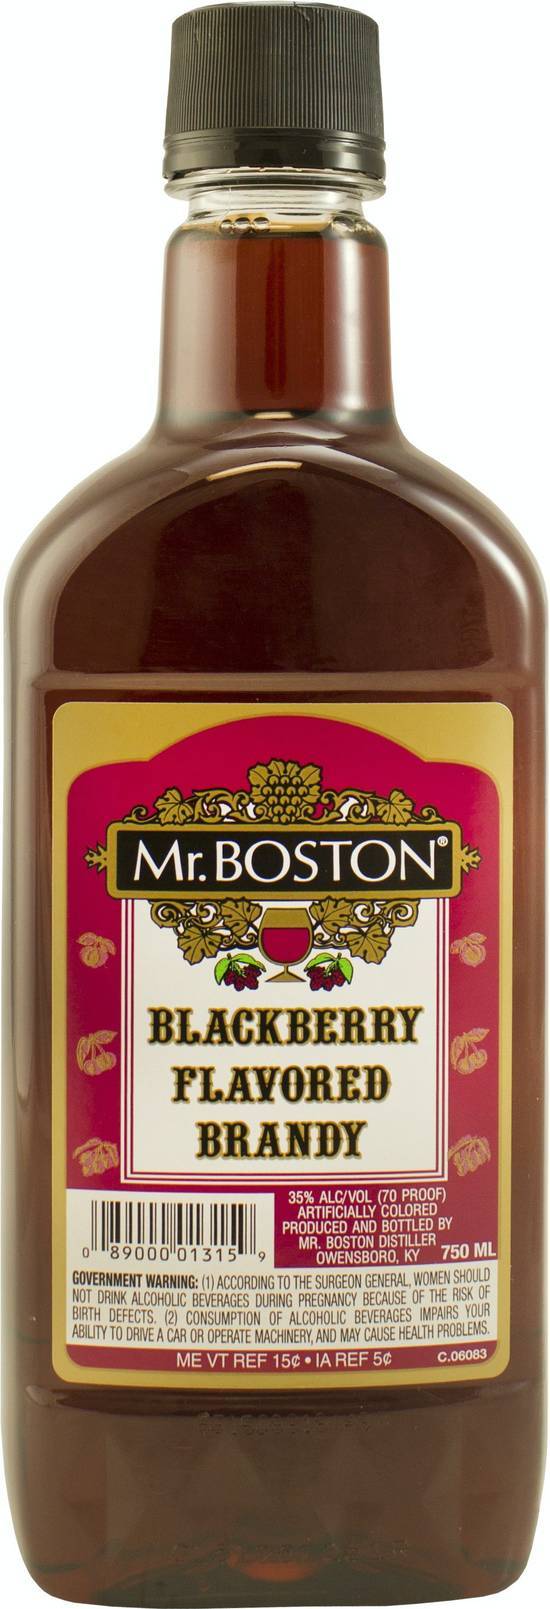 Mr. Boston Blackberry Brandy (750ml bottle)